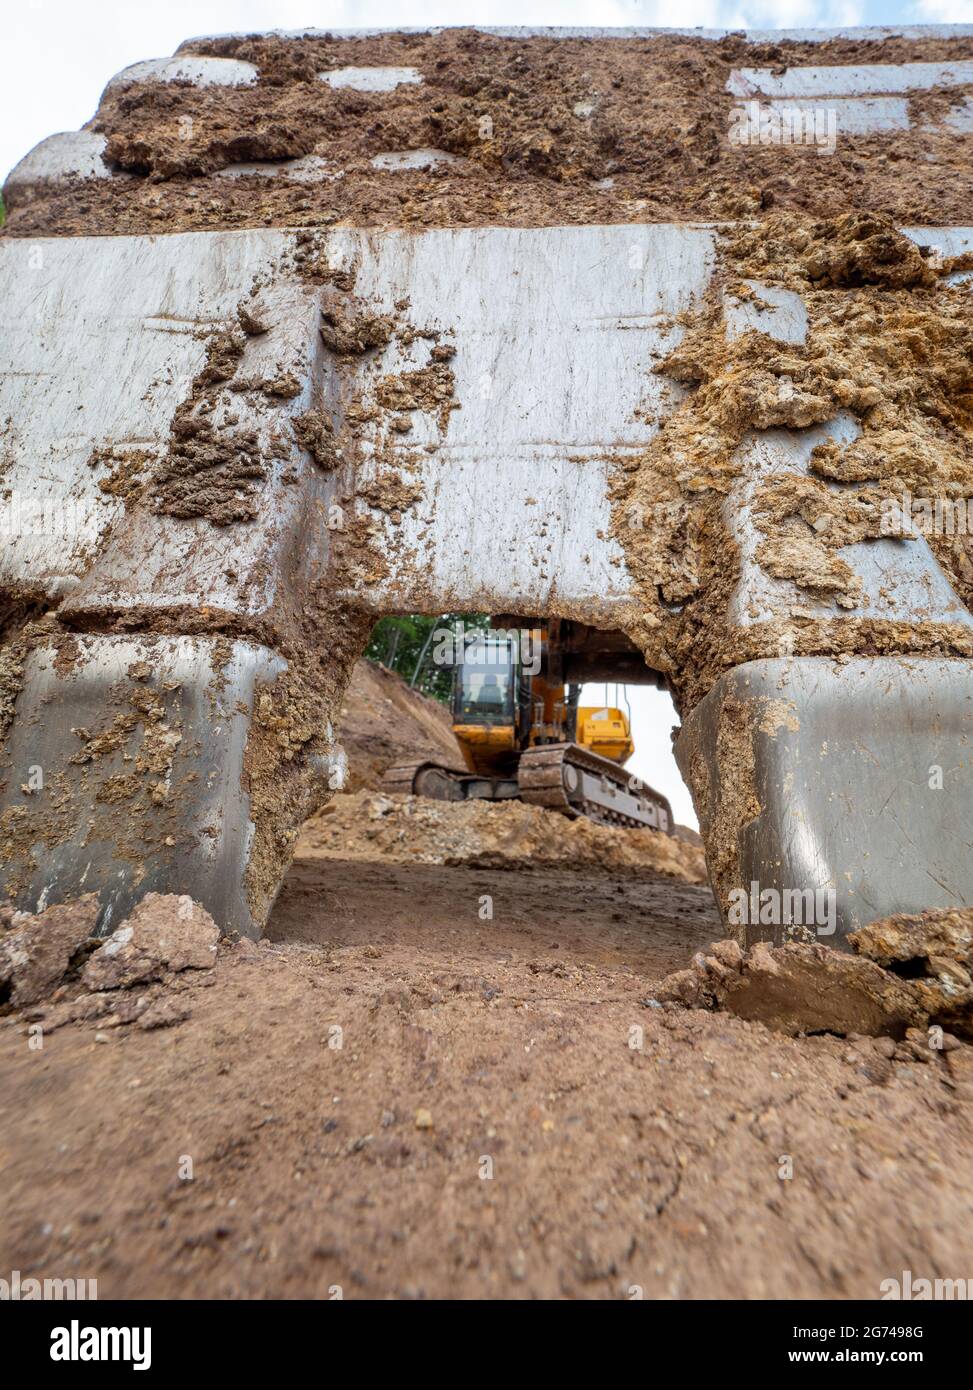 Cracked earth under excavator bucket bite the ground. Backhoe bucket. Green mind theme Stock Photo